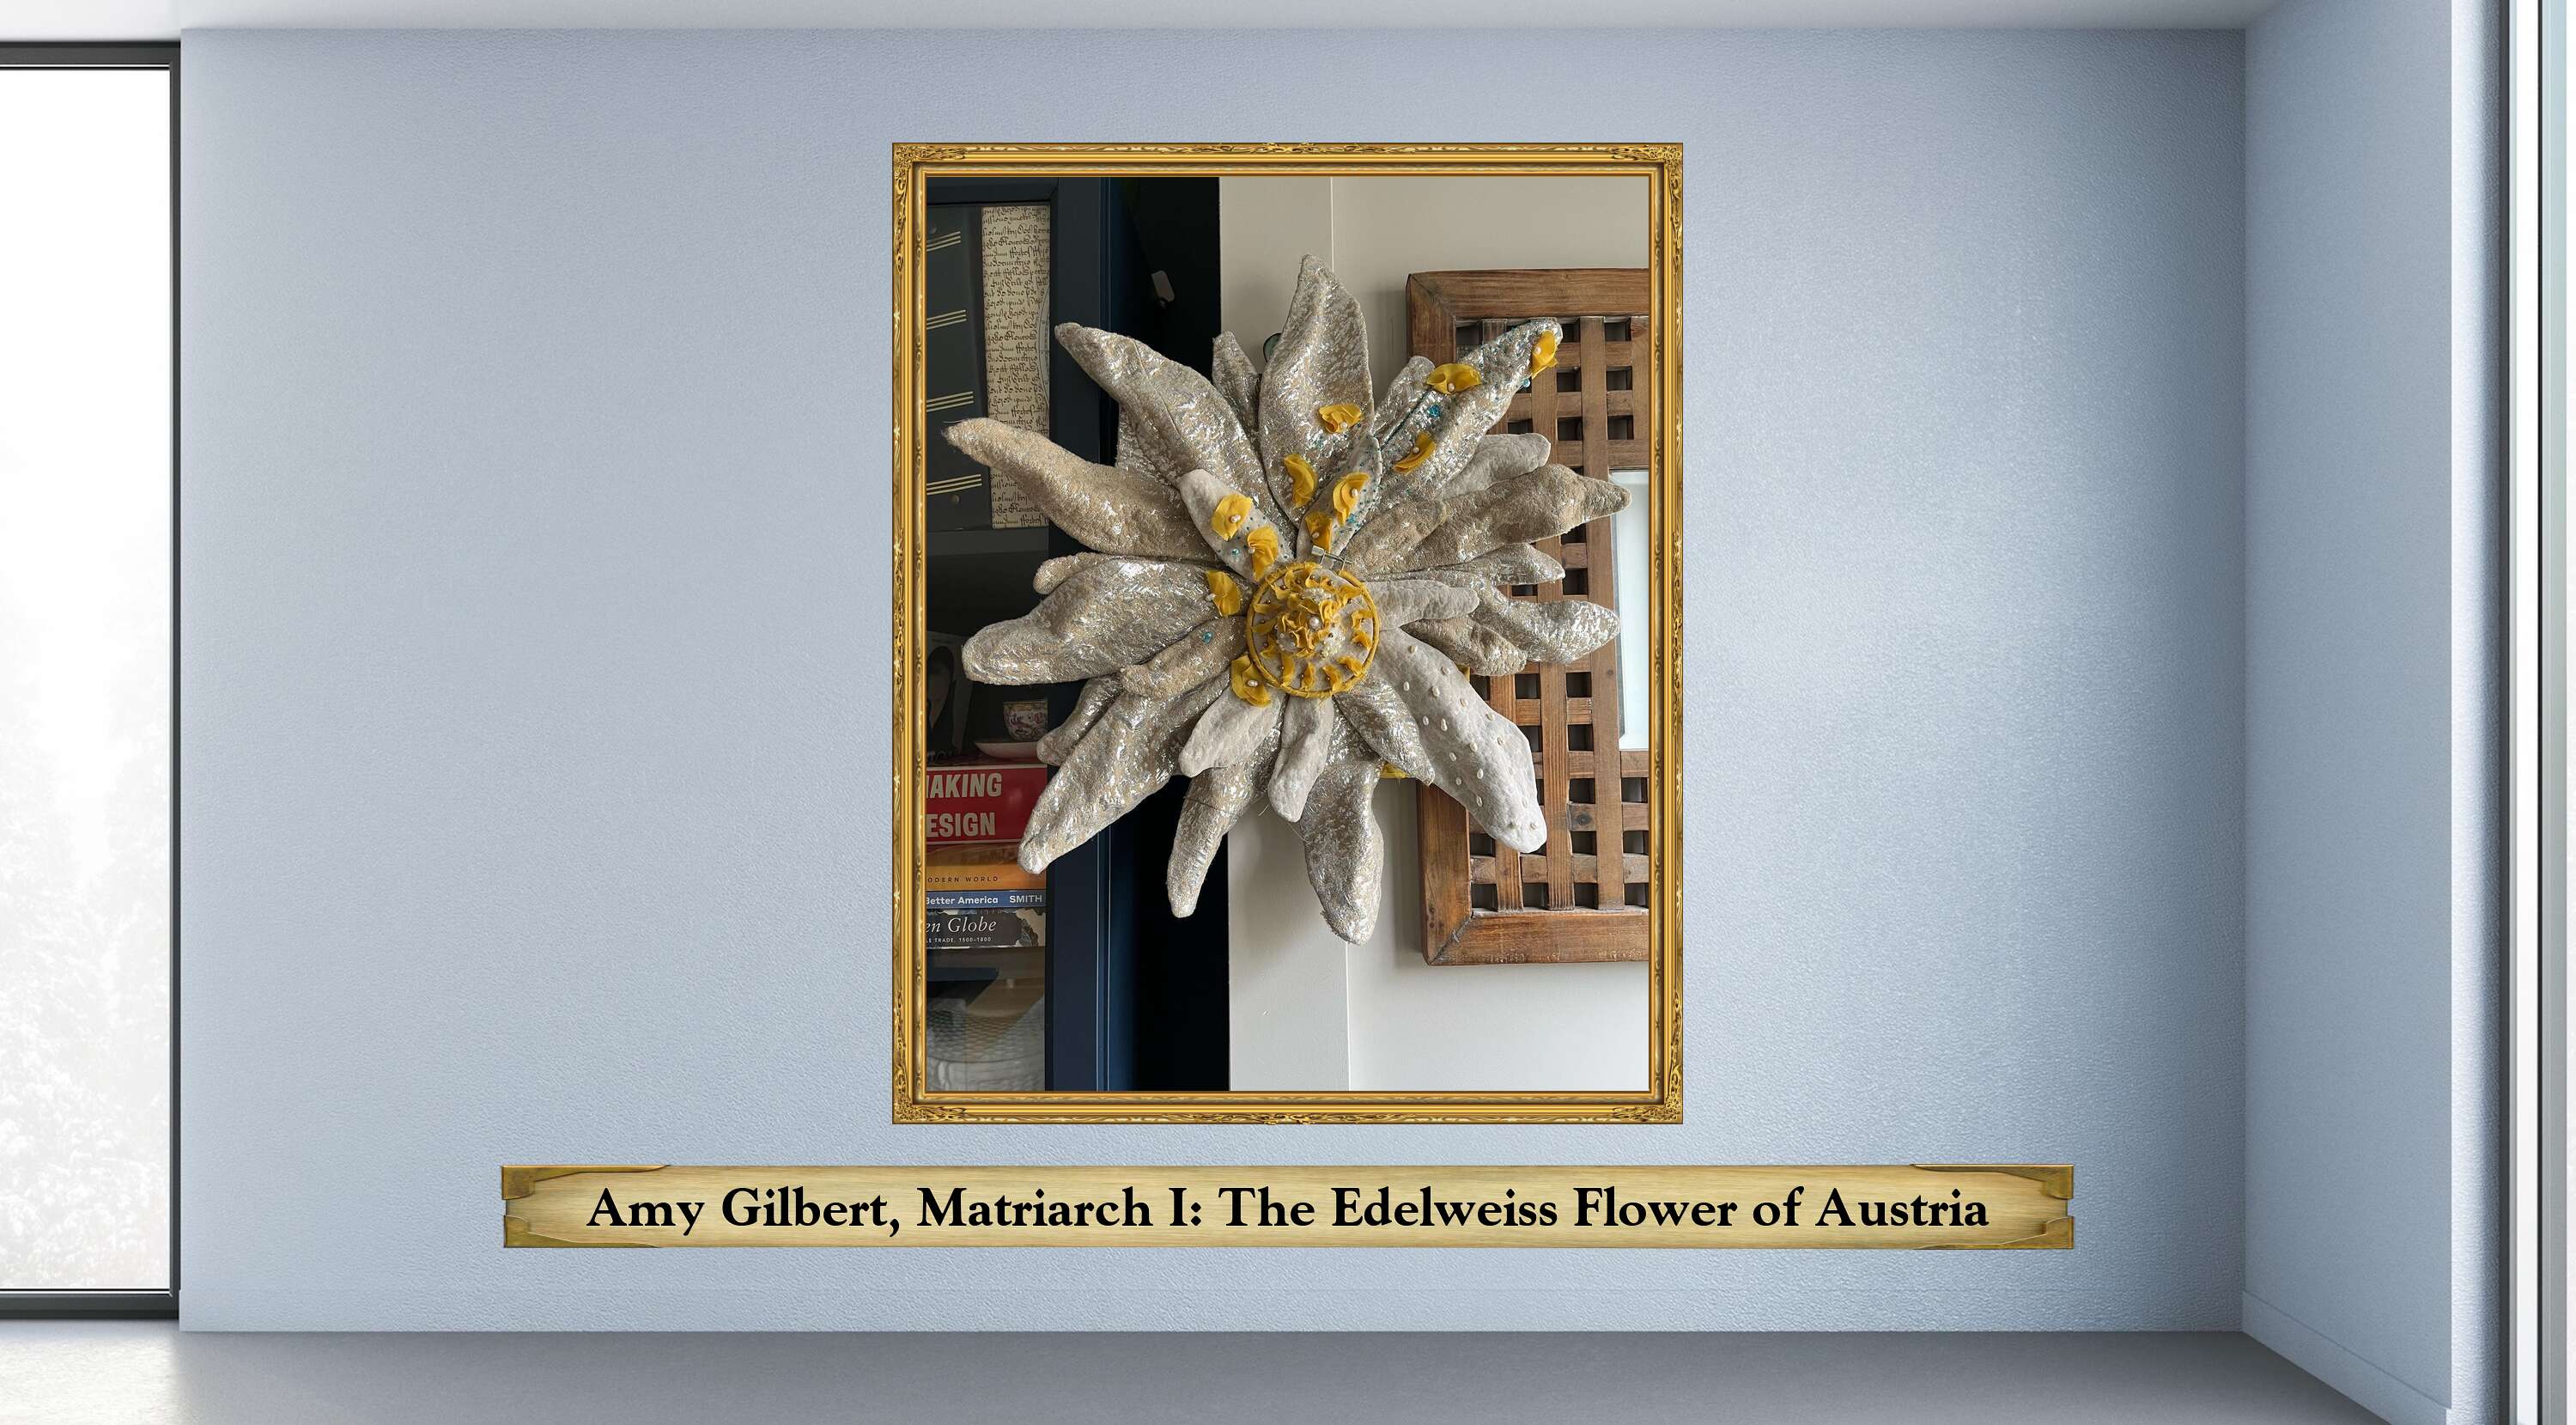 Amy Gilbert, Matriarch I: The Edelweiss Flower of Austria